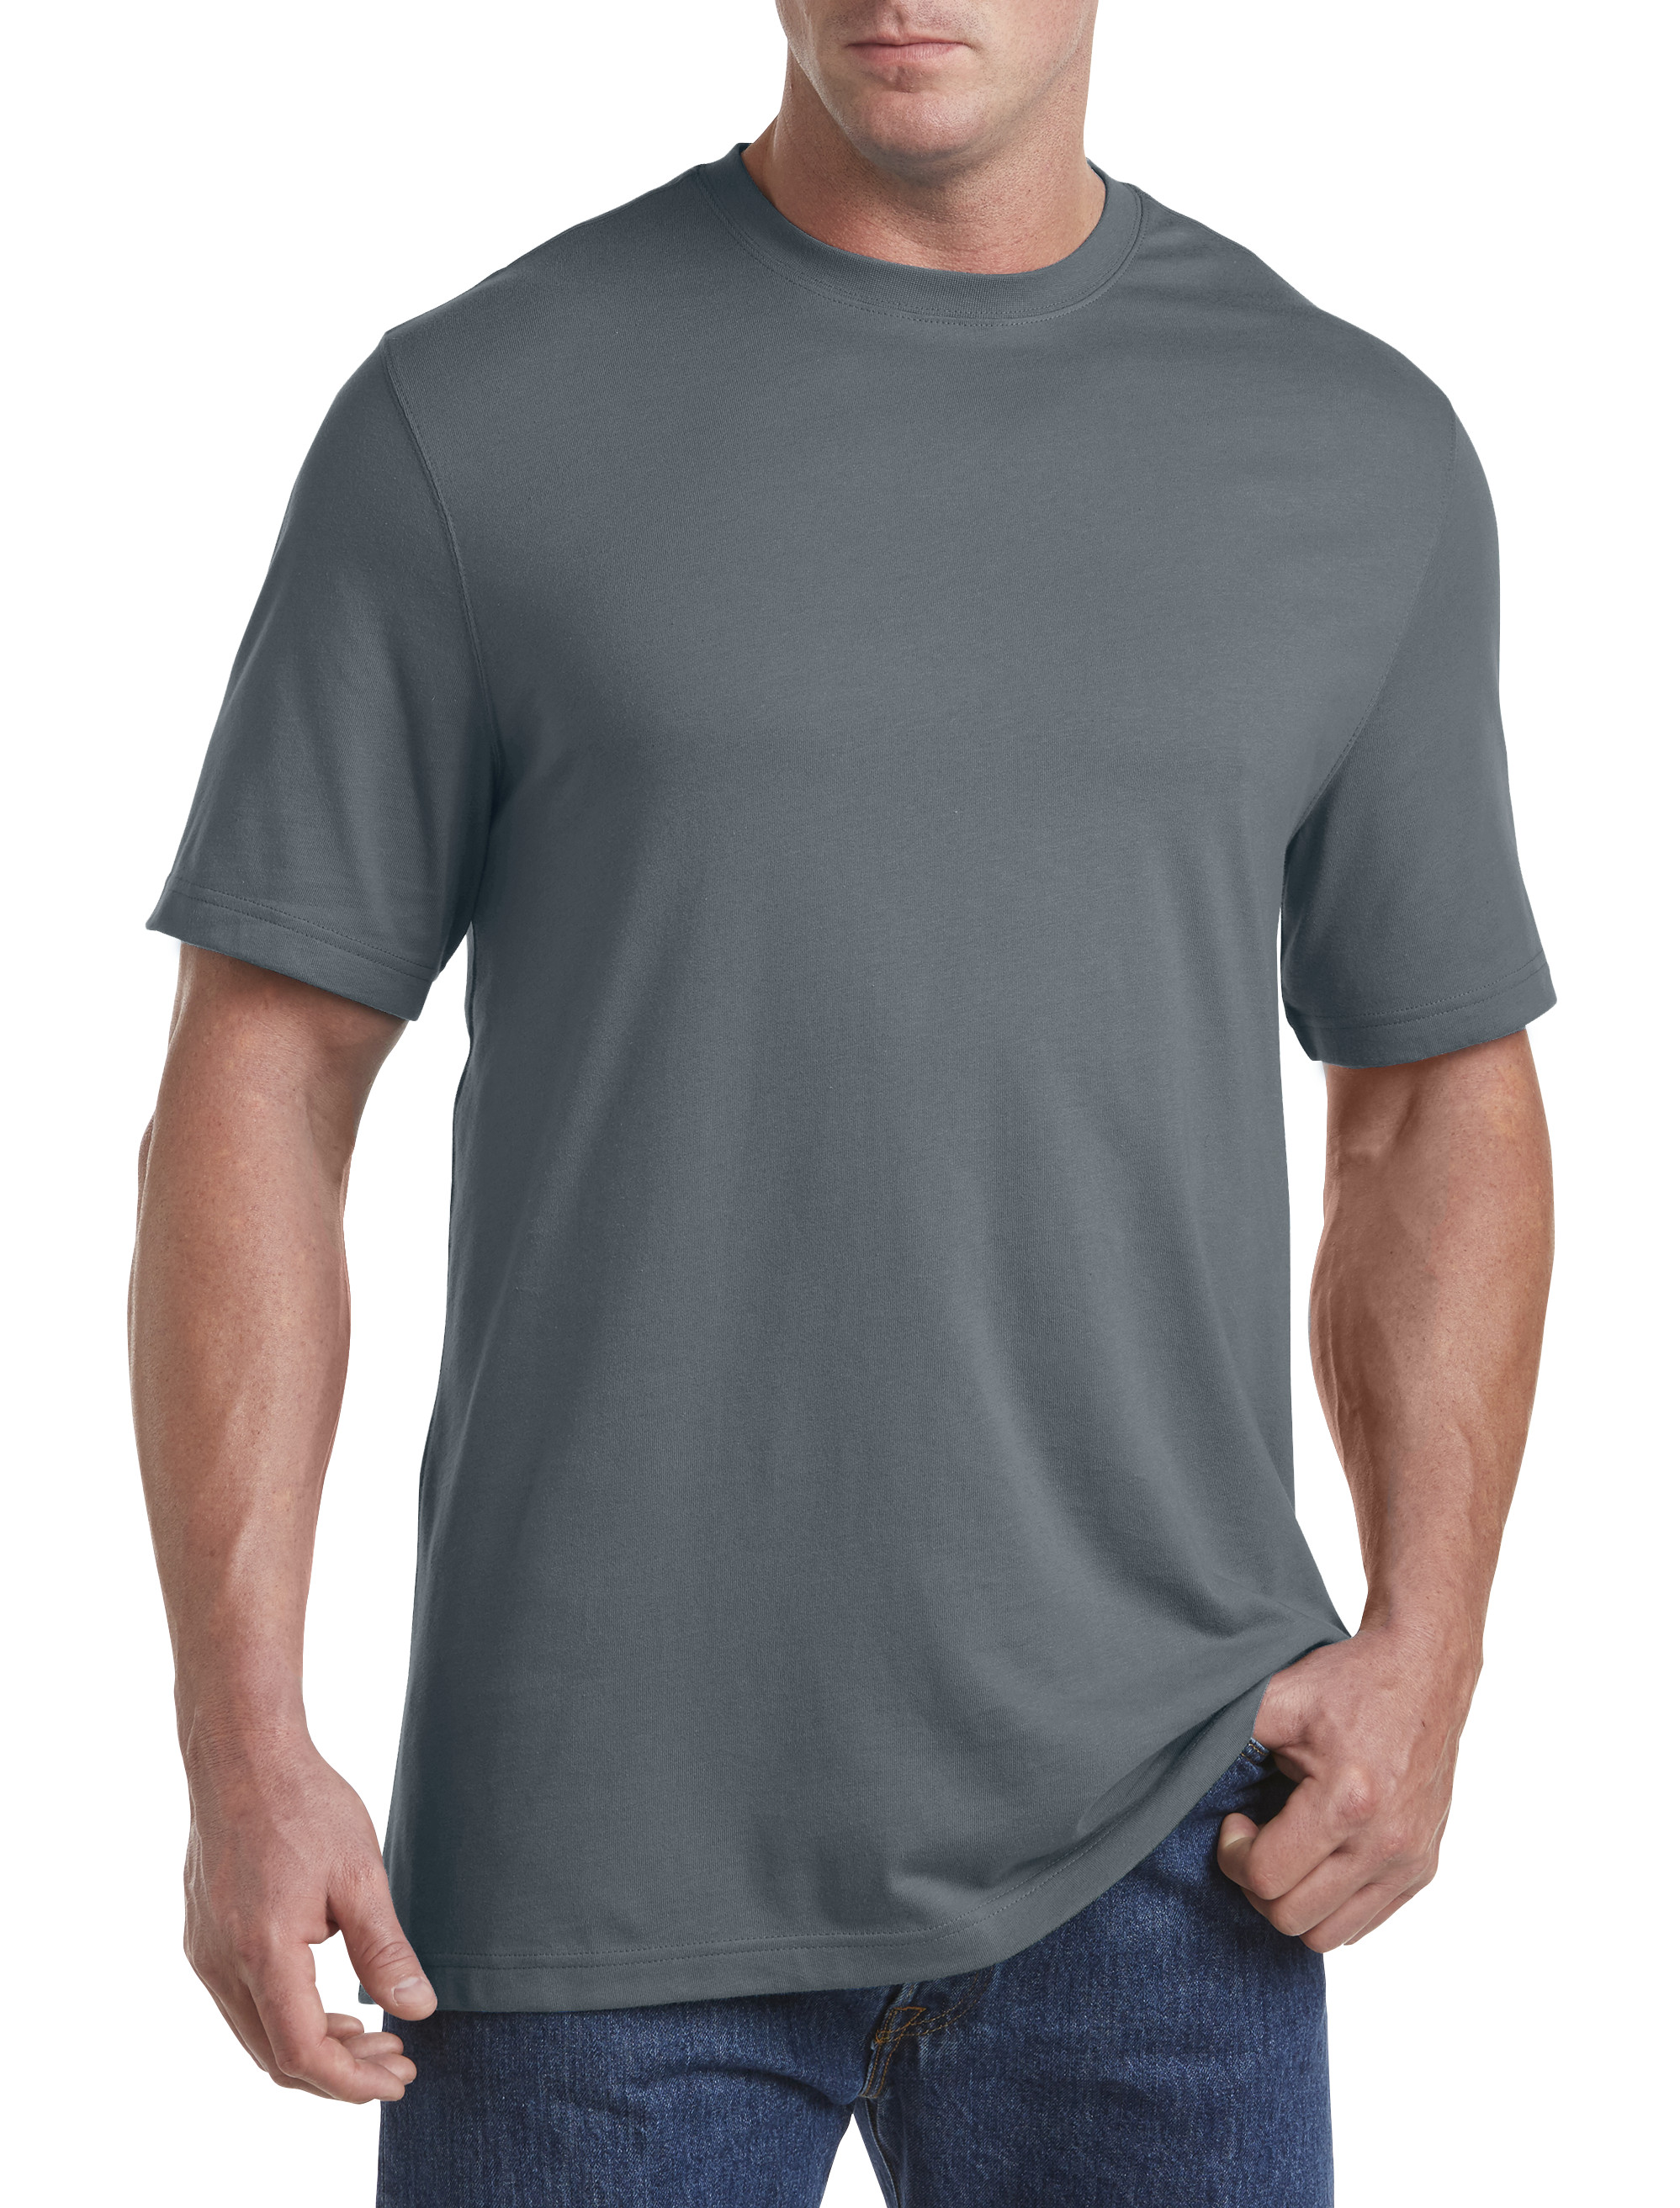 Big buttons' Men's Premium T-Shirt